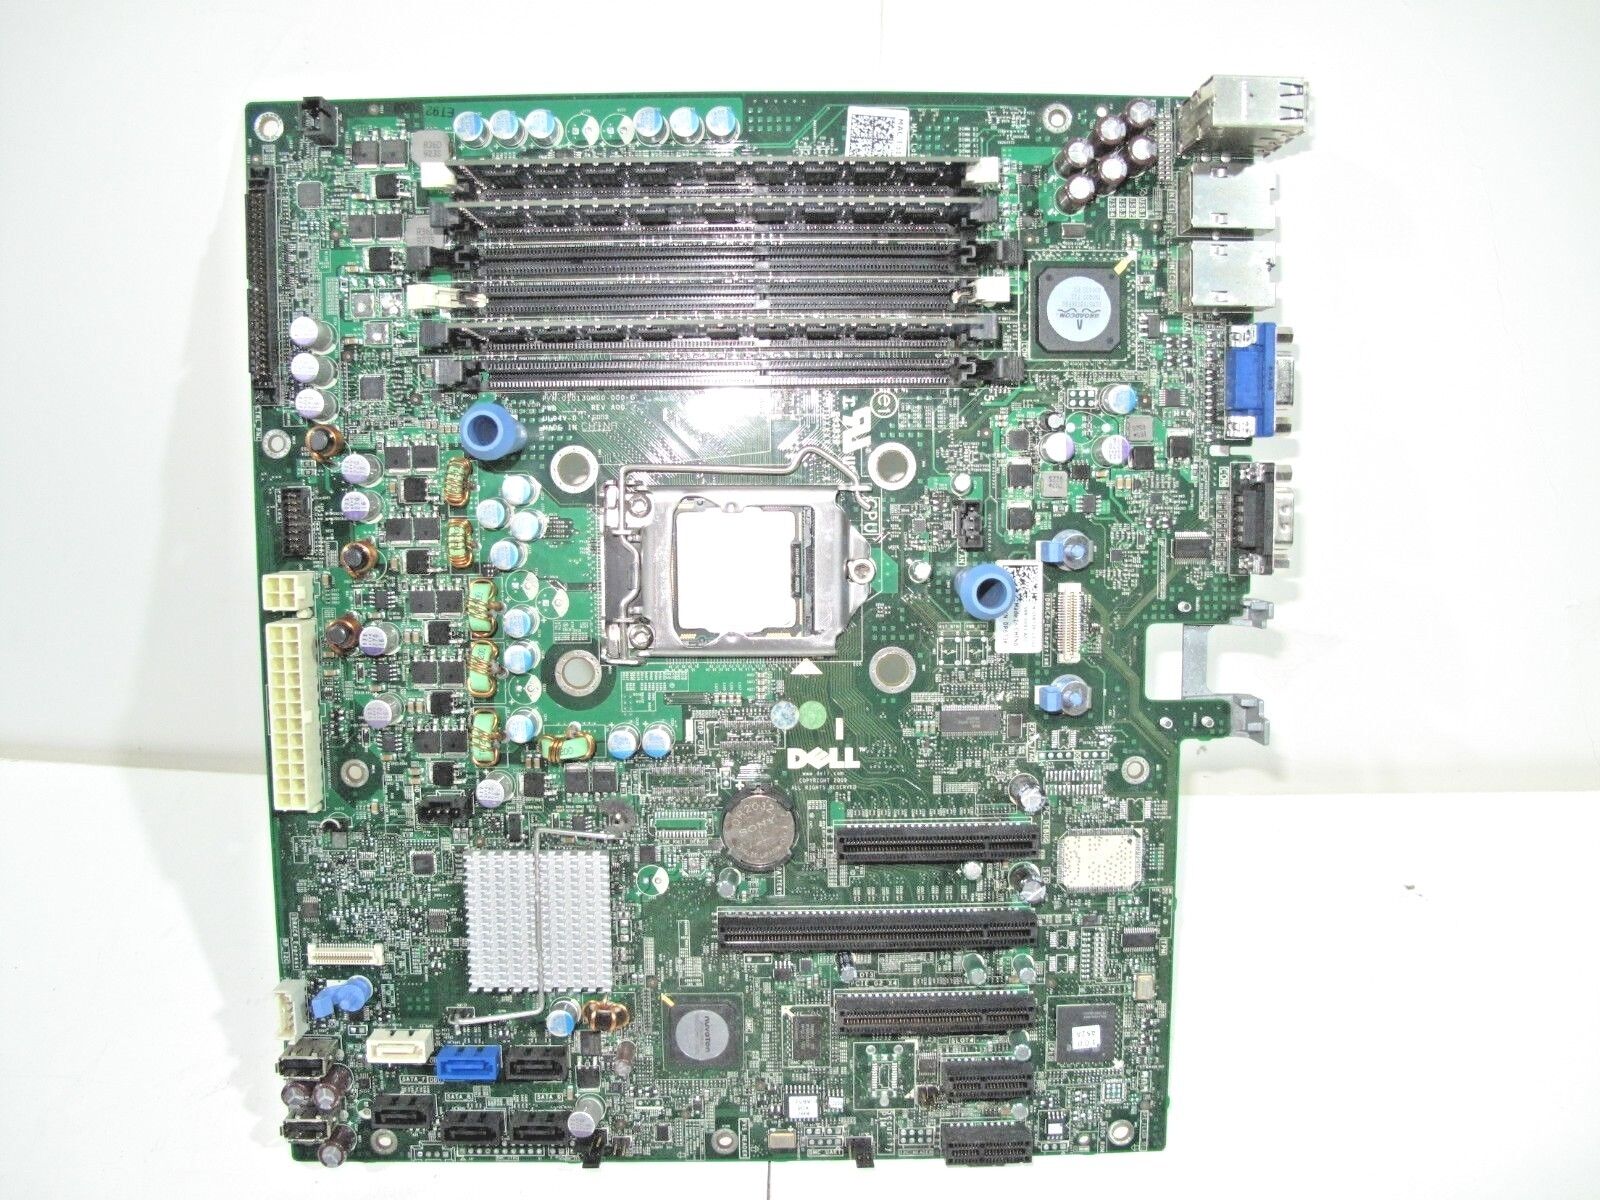 Dell Poweredge T310 Server LGA1156 Motherboard P673K 0P673K + X3430 XEON +10GB